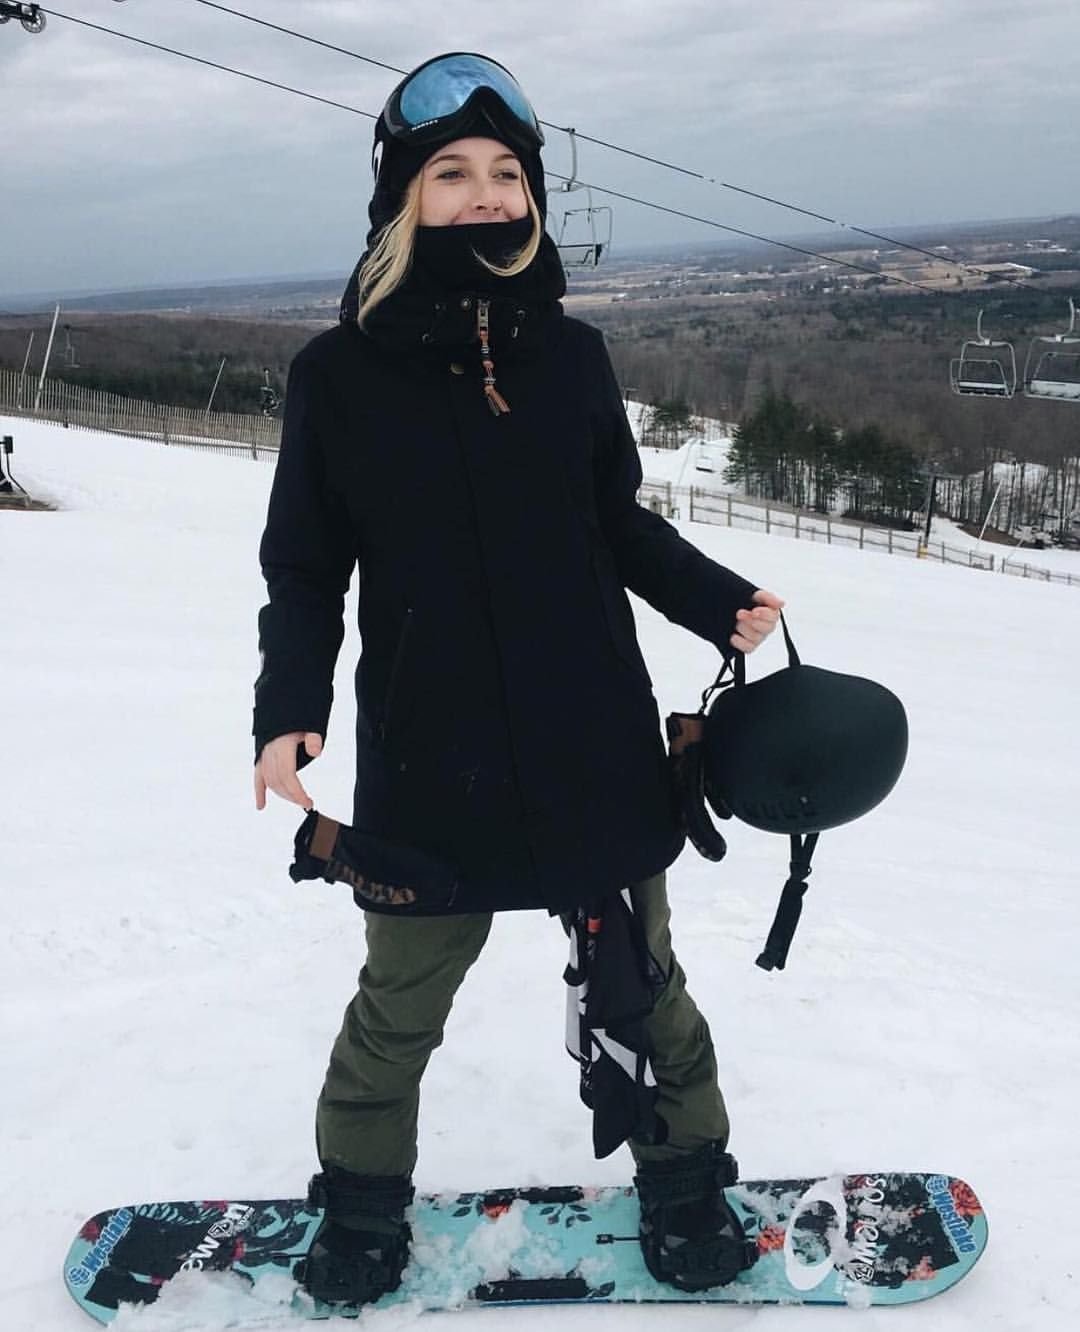 Сноуборд одежда черная. Стильная одежда для сноубордистов. Костюм для катания на сноуборде. Сноубордический костюм девушки. Одежда для сноубордистов.